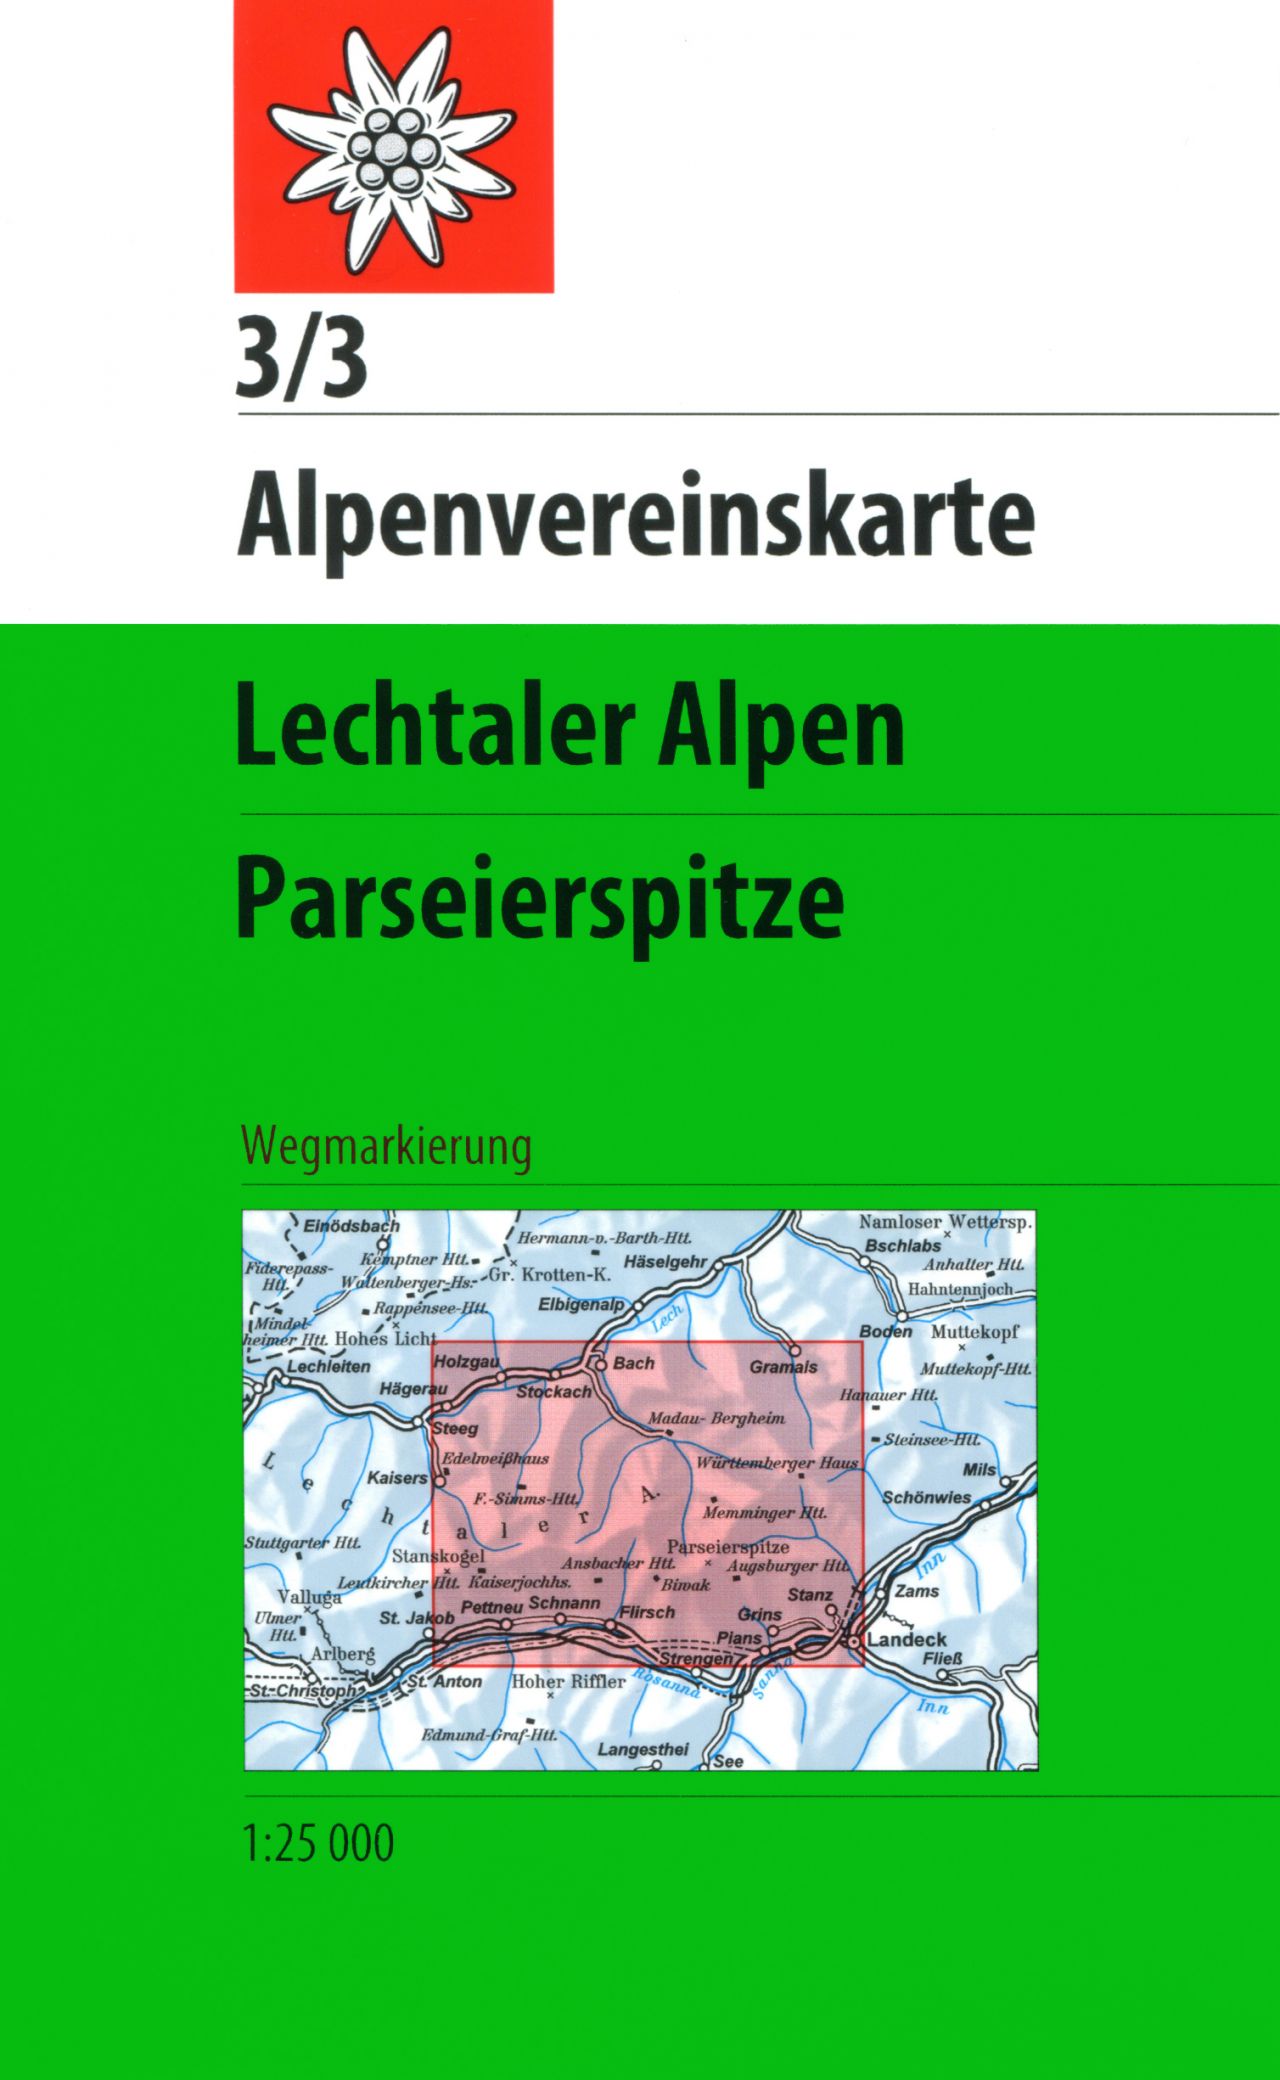 Online bestellen: Wandelkaart 03/3 Alpenvereinskarte Lechtaler Alpen - Parseierspitze | Alpenverein